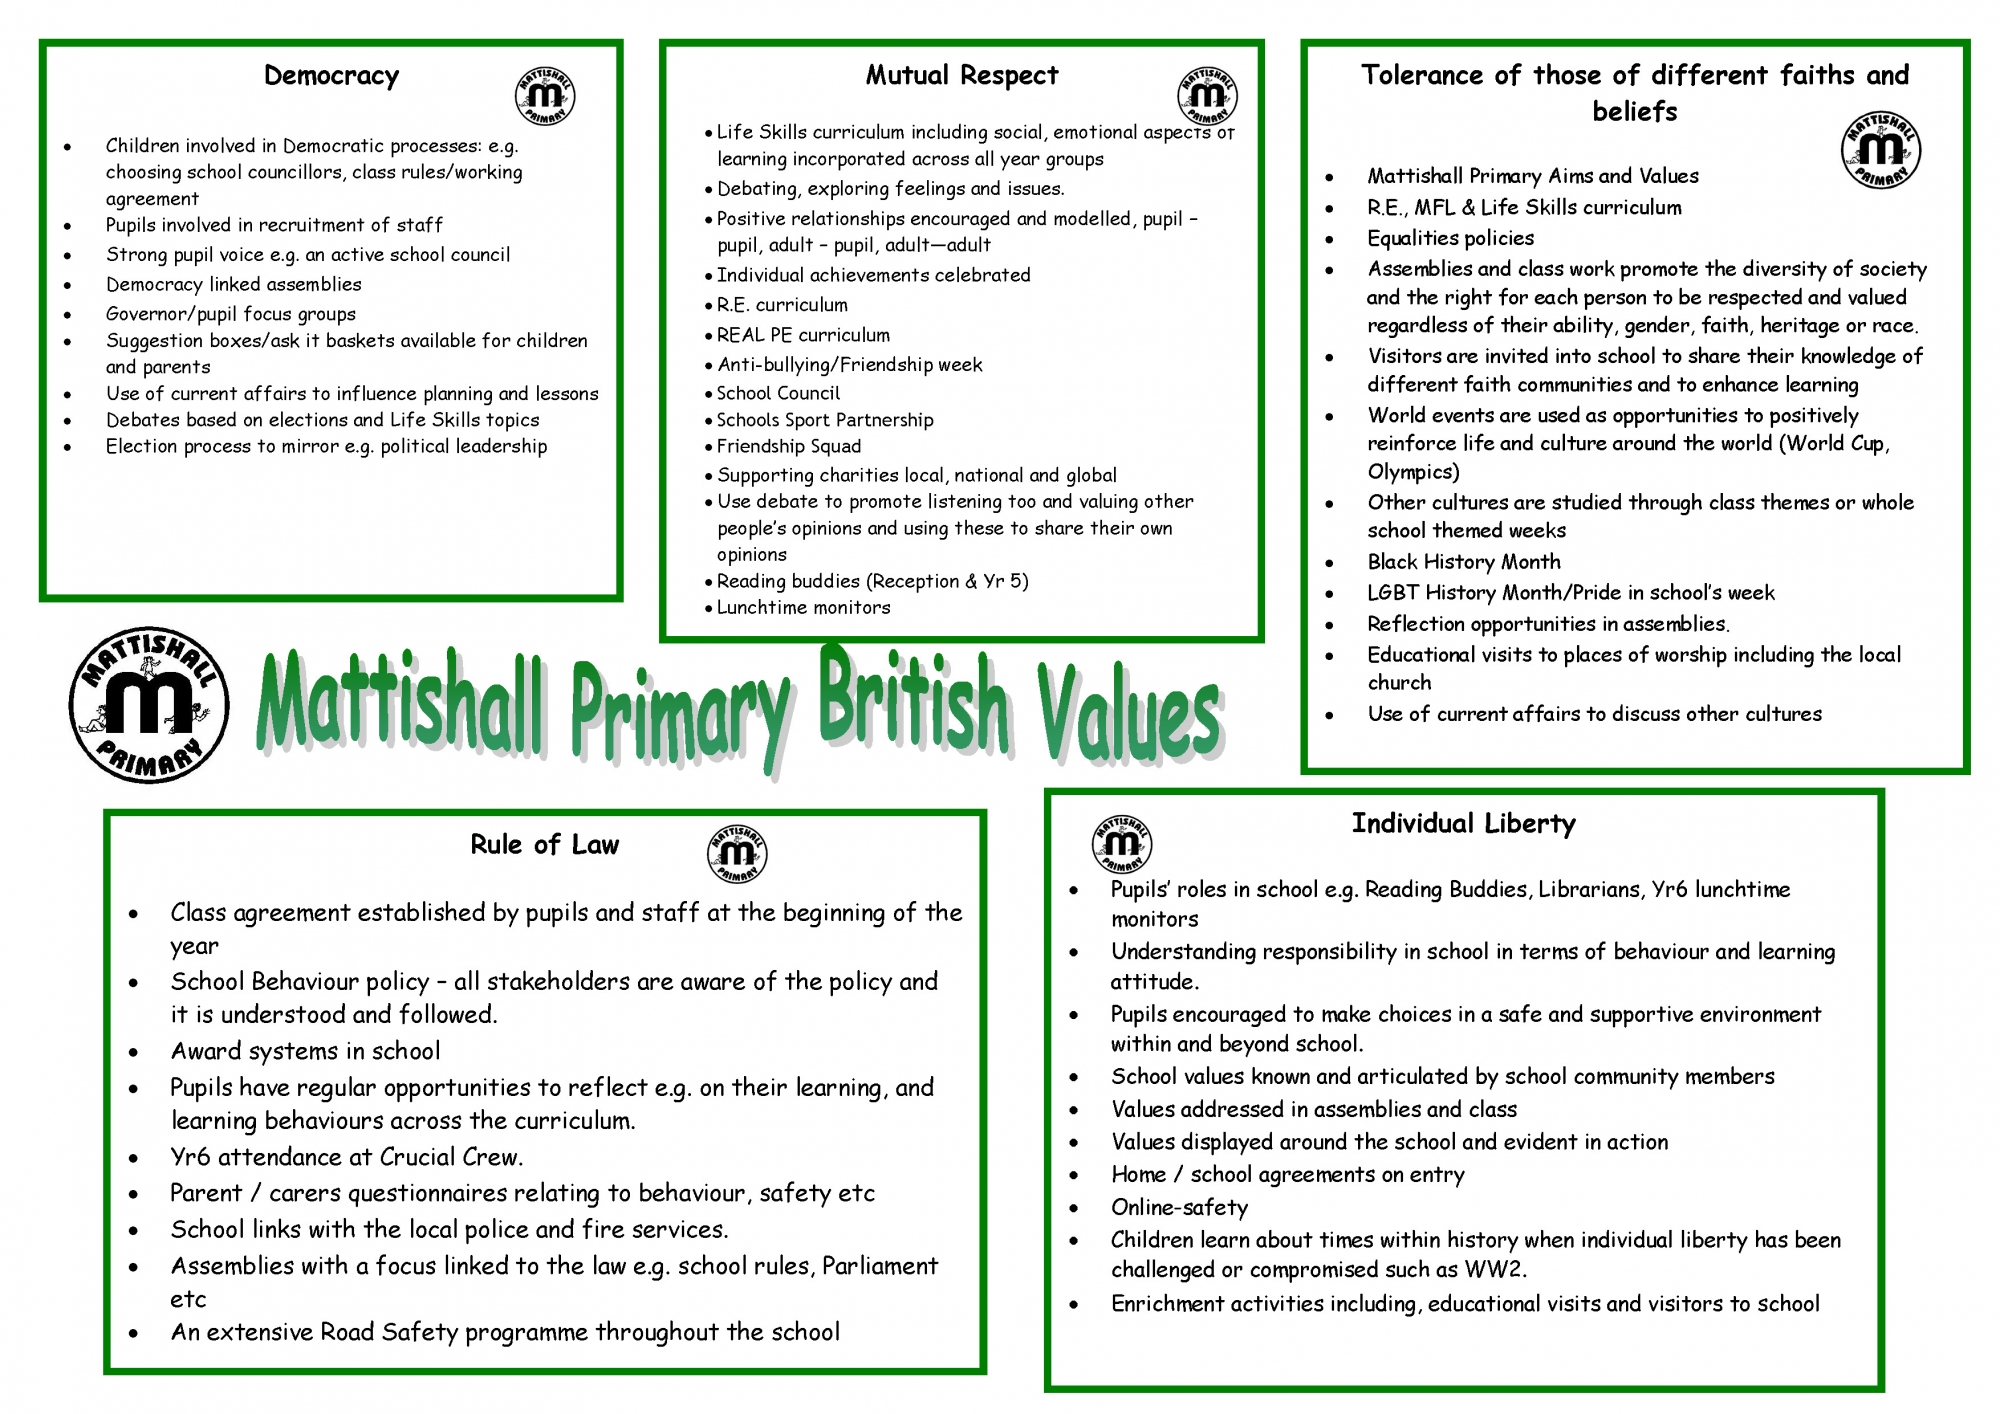 Mattishall British Values